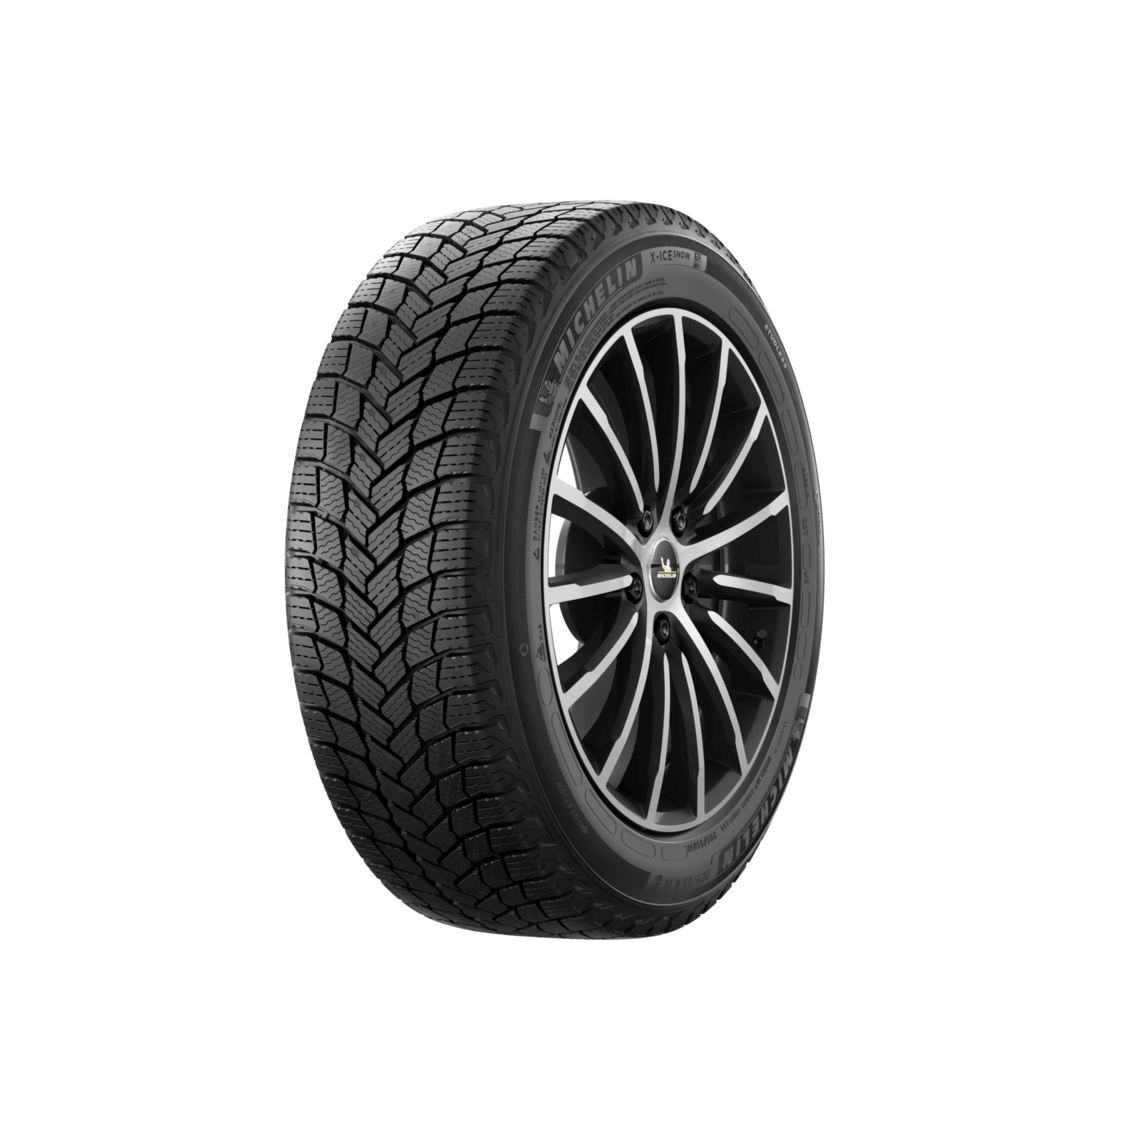 Gomme Nuove Michelin 235/60 R18 107T X-ICE SNOW SUV XL M+S pneumatici nuovi Invernale